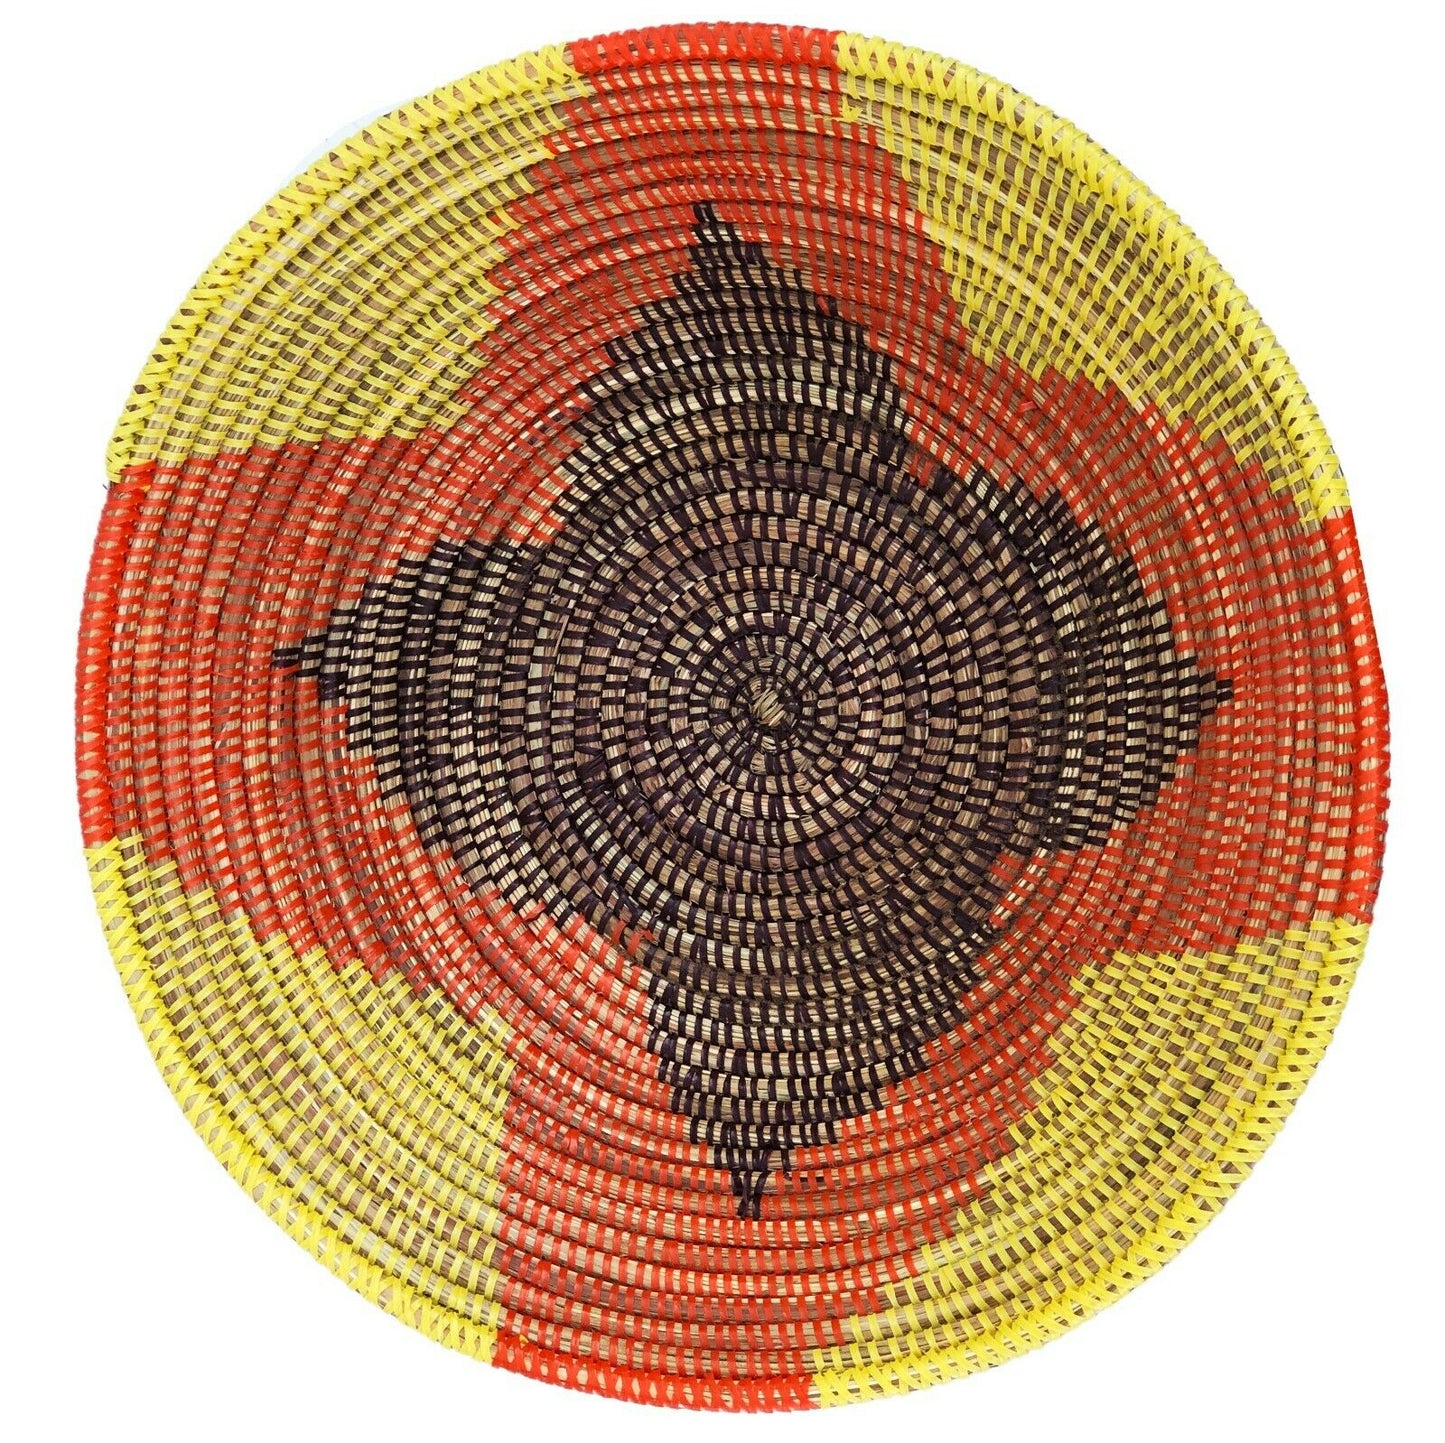 #510 Handmade Woven Wolof Basket From Senegal 16.5" in Diameter